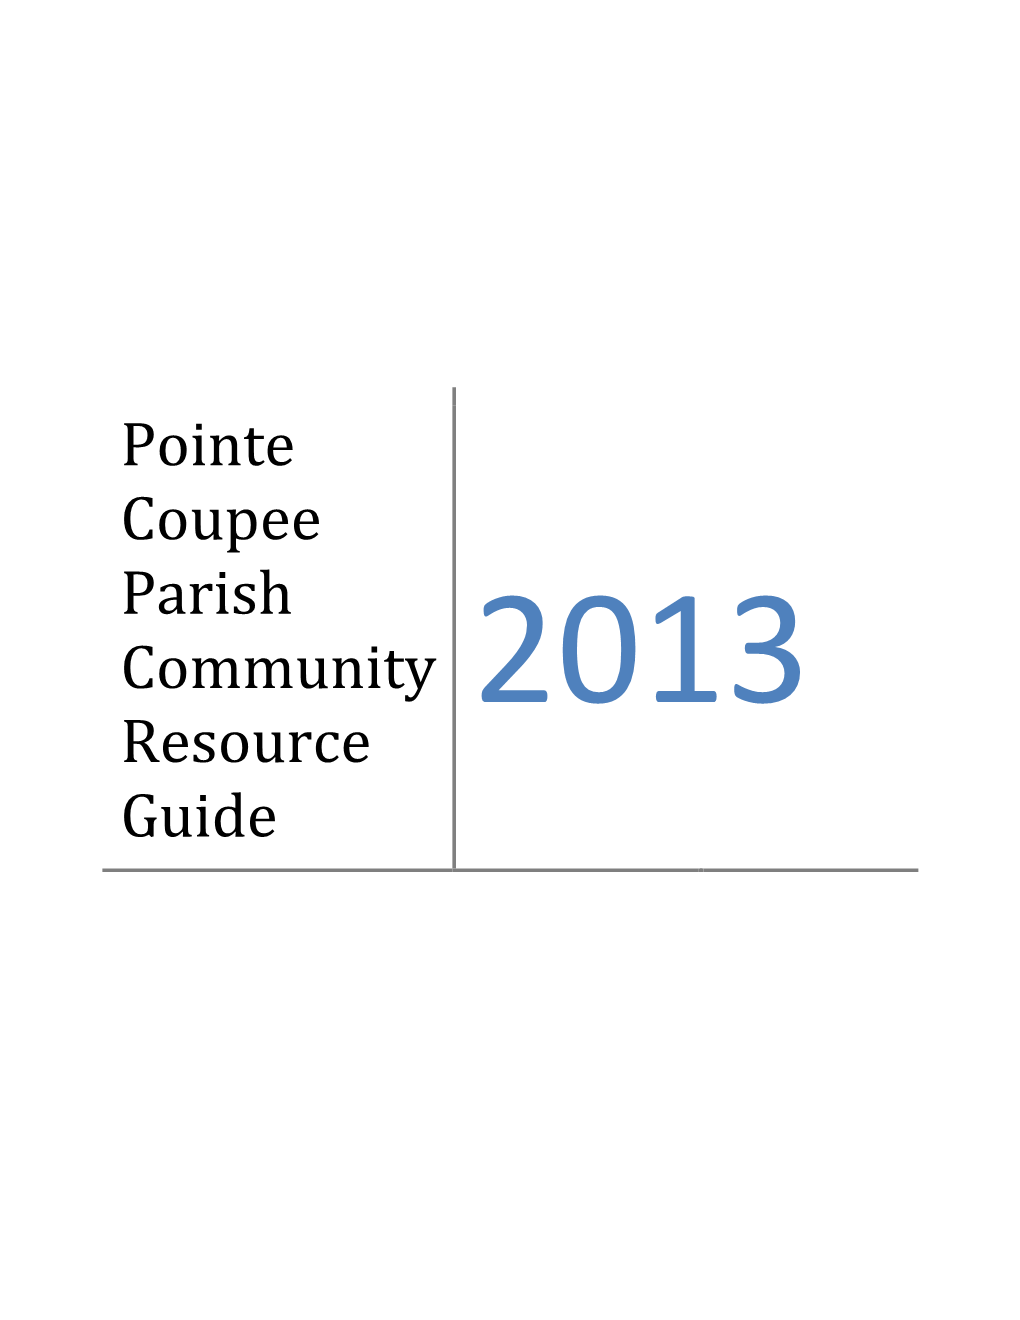 Pointe Coupee Parish Community Resource Guide